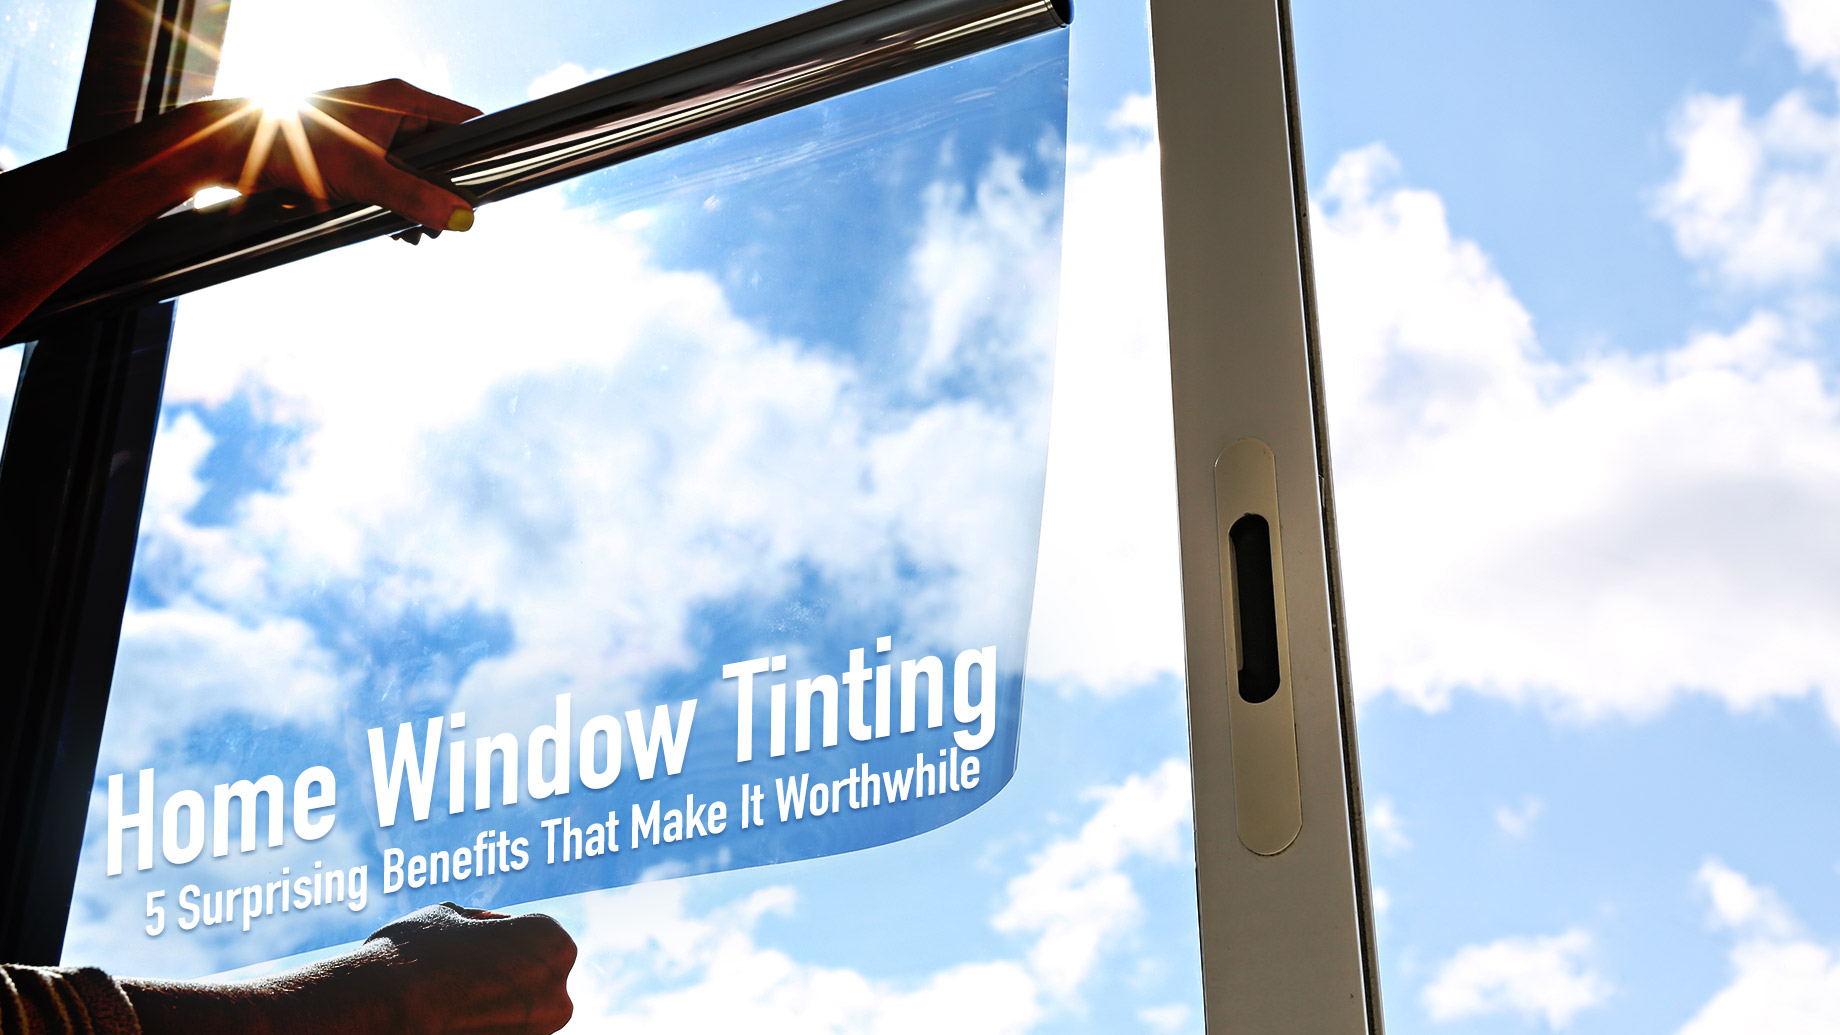 Home Window Tinting - 5 Surprising Benefits That Make It Worthwhile